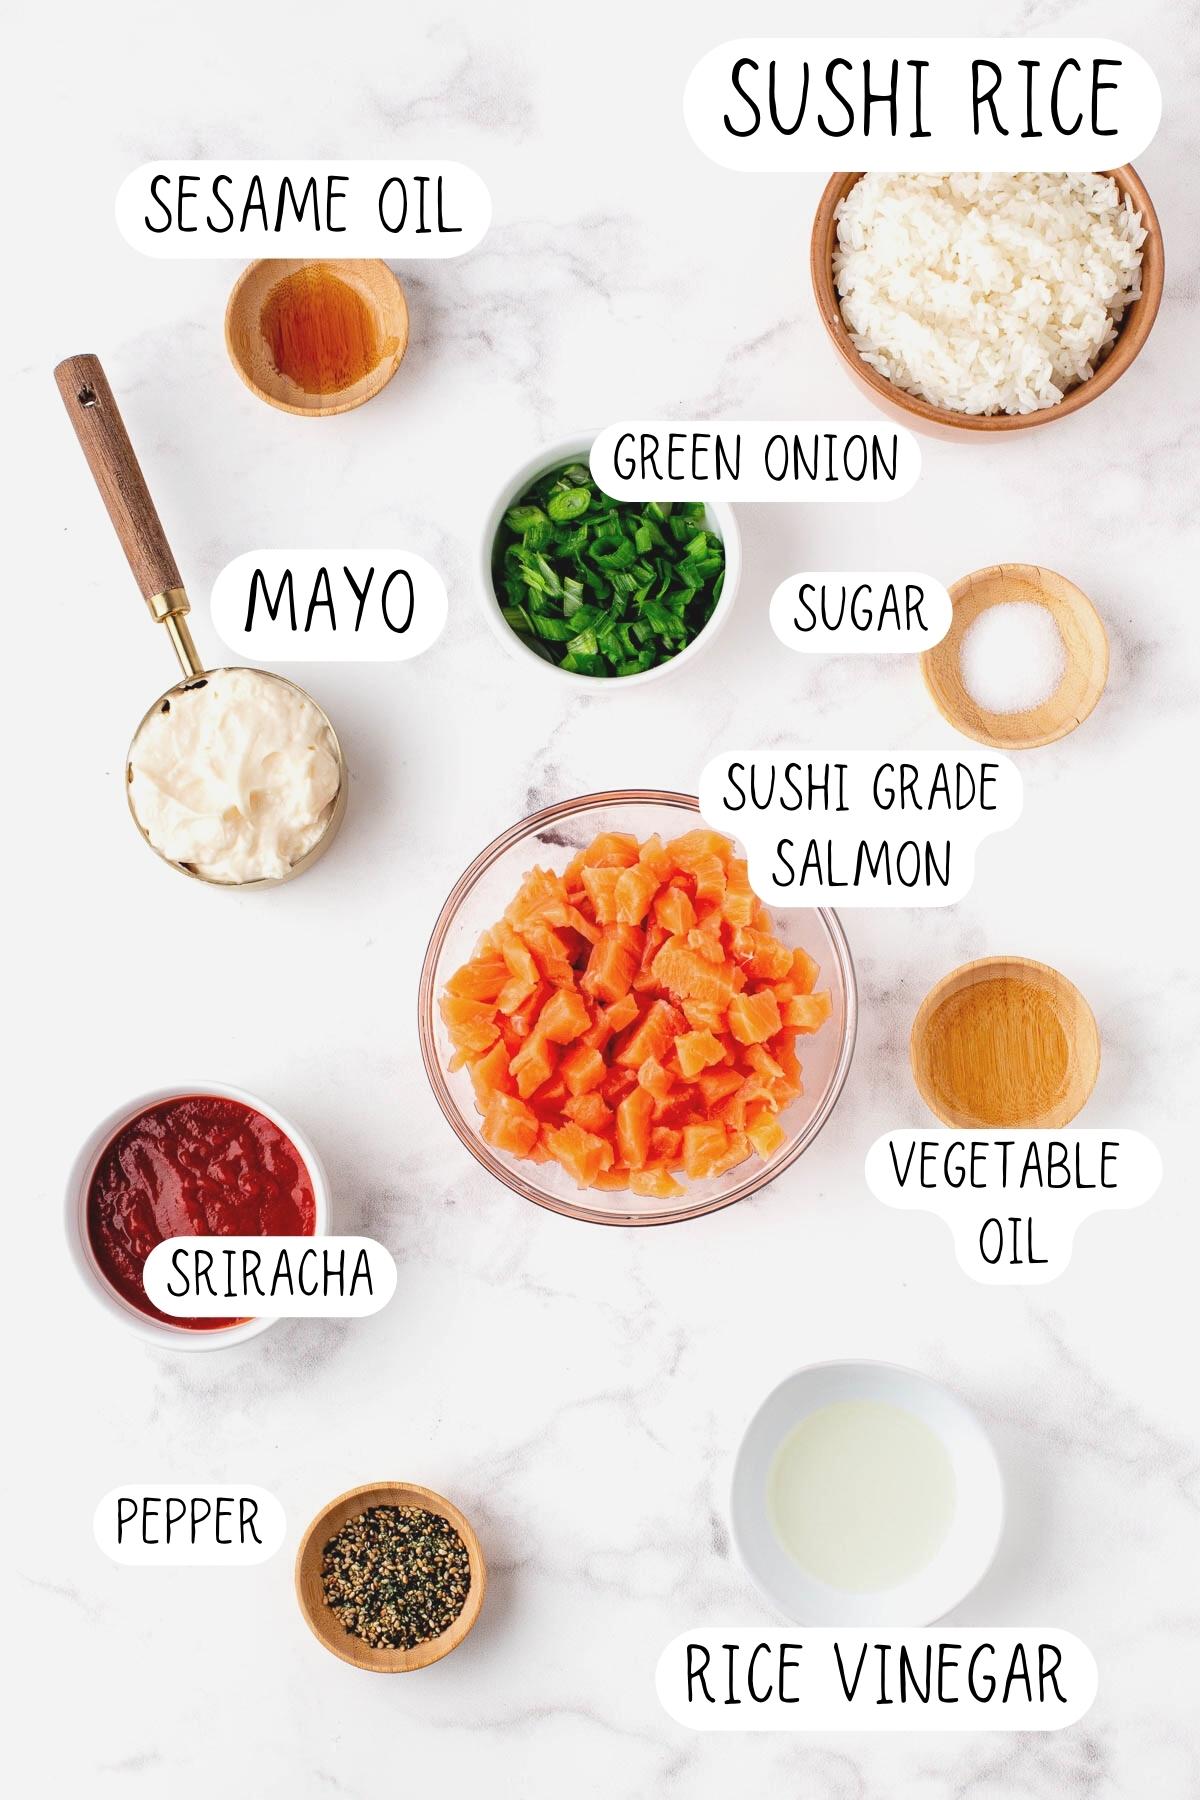 ingredients for salmon bites, including rice, sesame oil, green onion, Sriracha